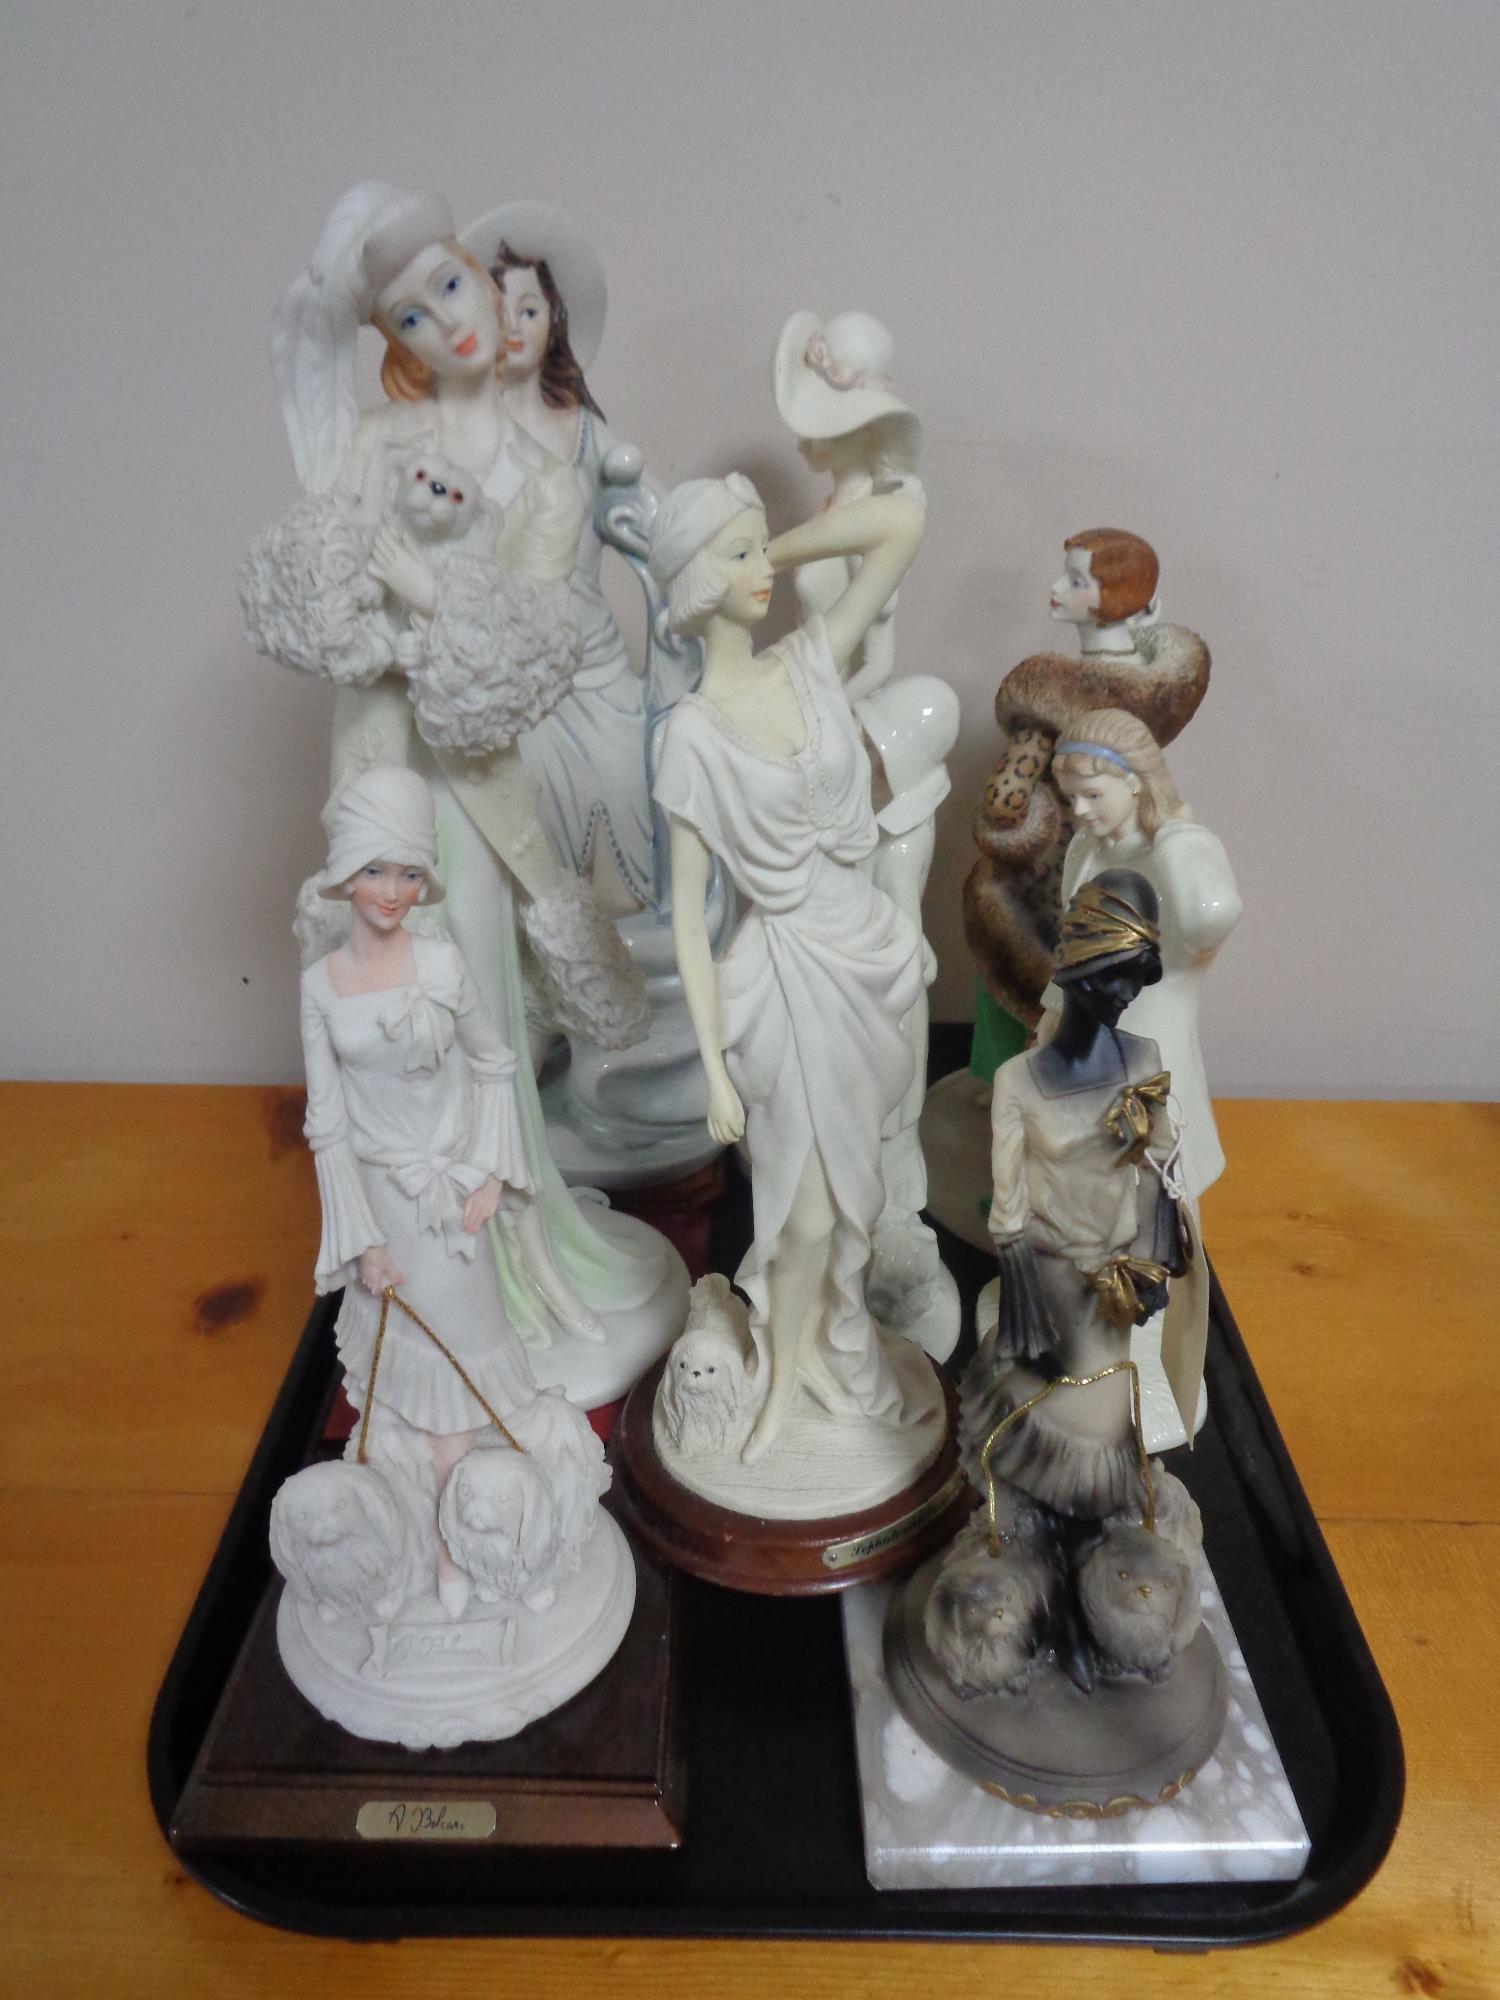 A tray of decorative ornamental modern figures,